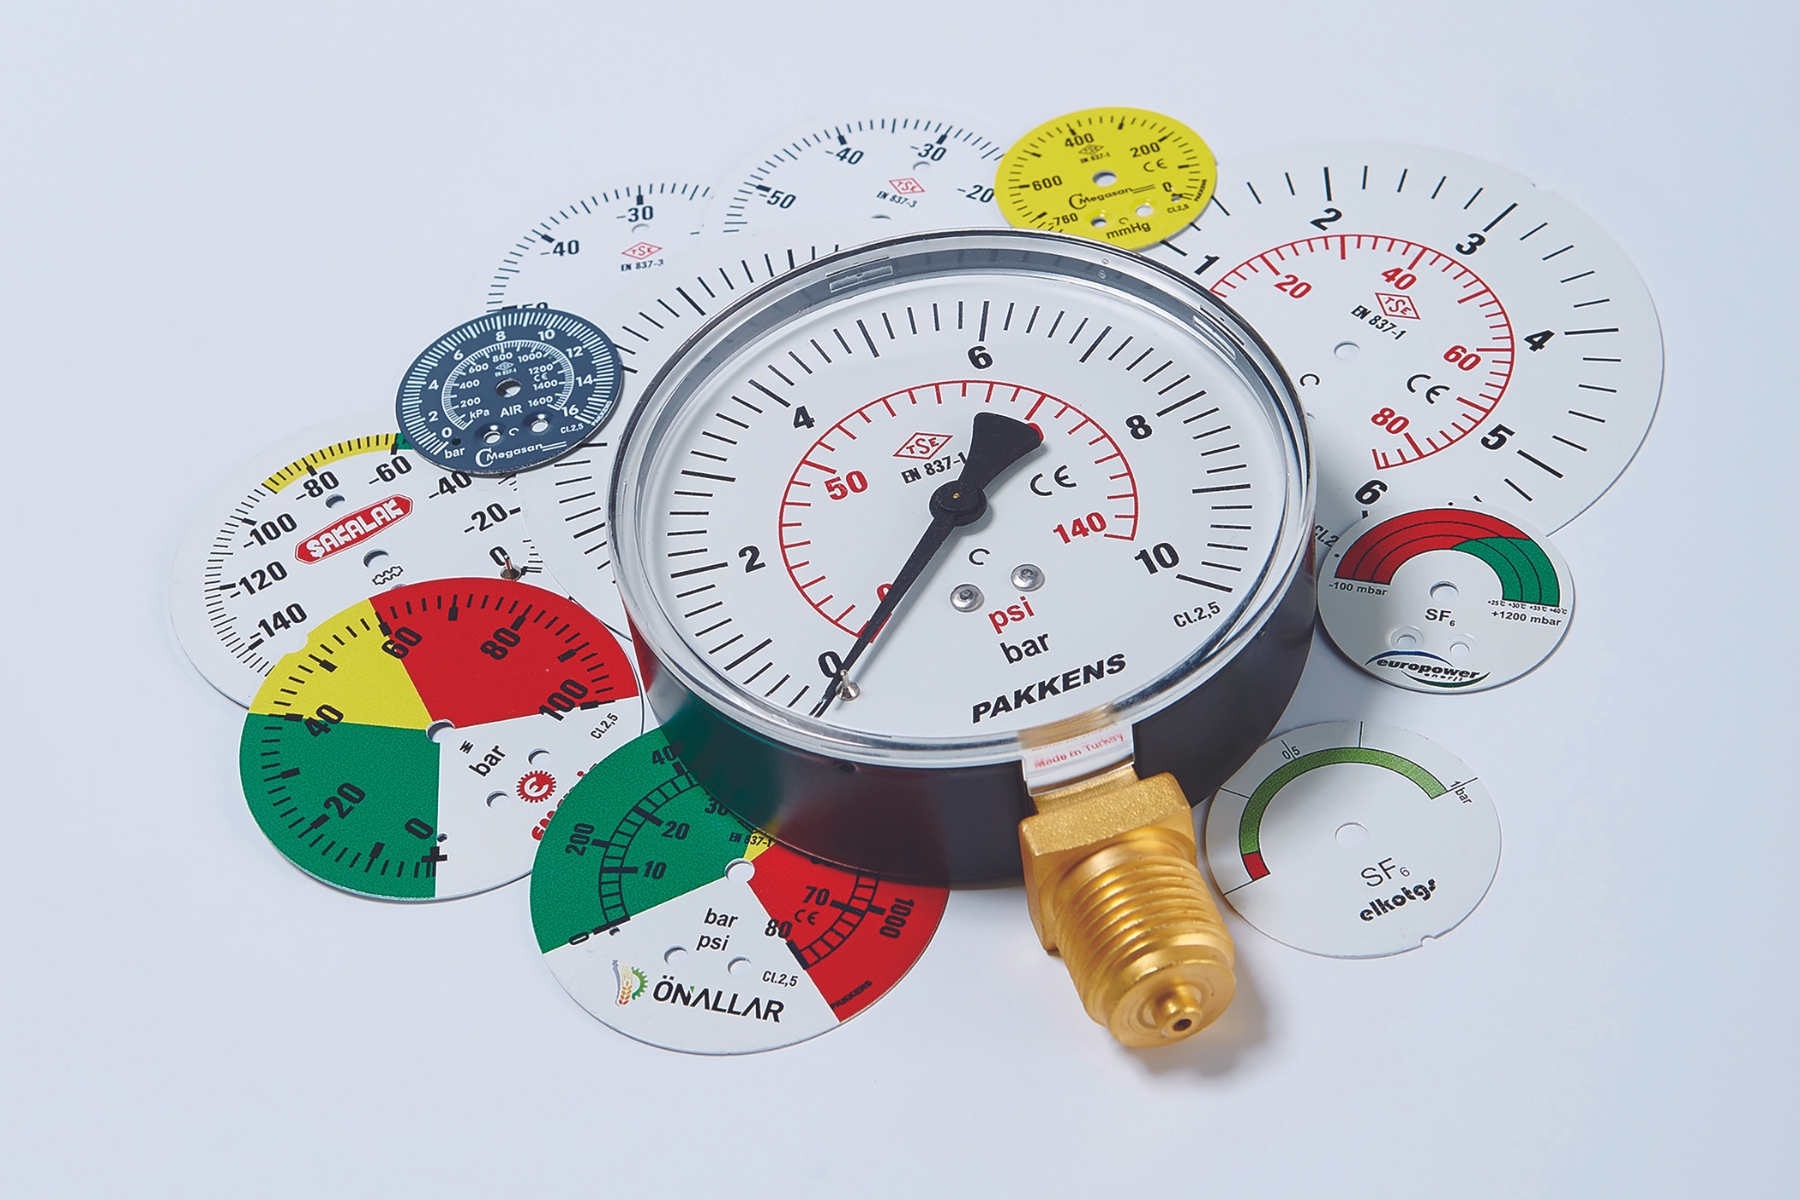 Mimaki UV printed gauge and dials